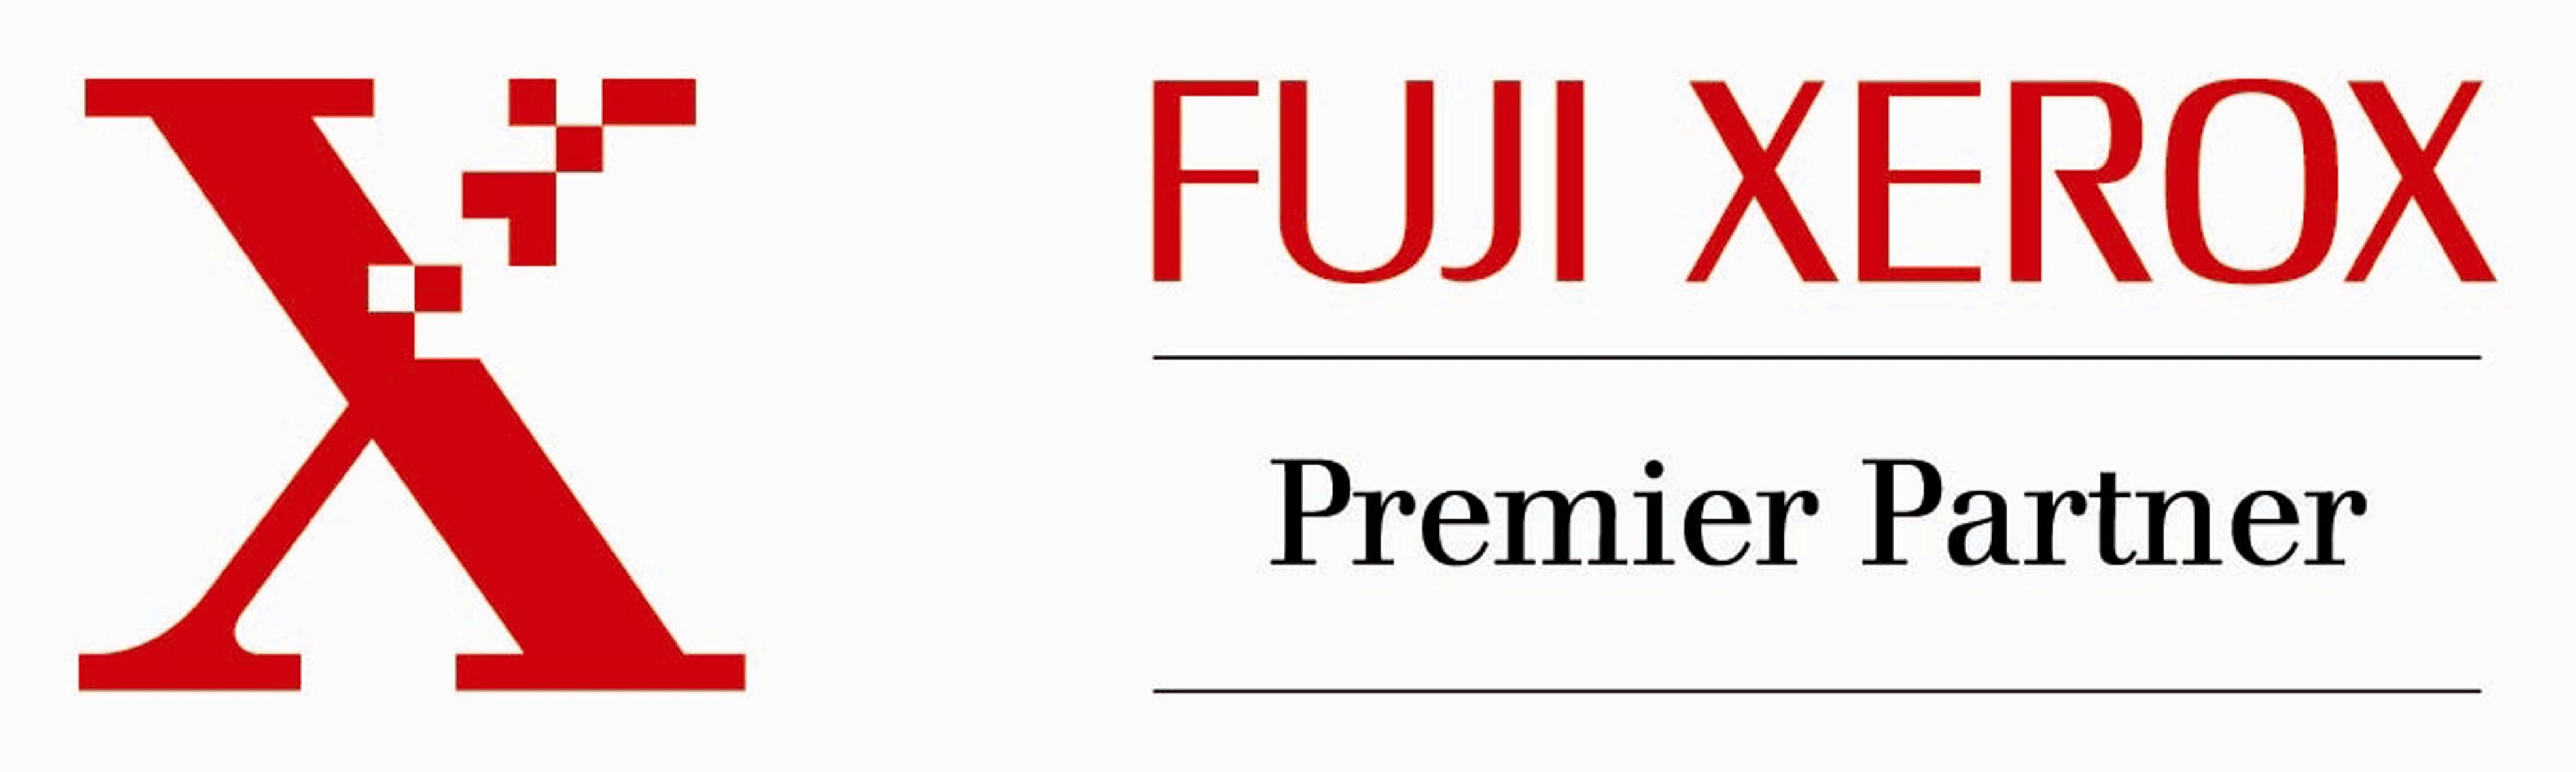 Fuji Xerox Logo - Fuji Xerox Premier Partner » Nortec IT